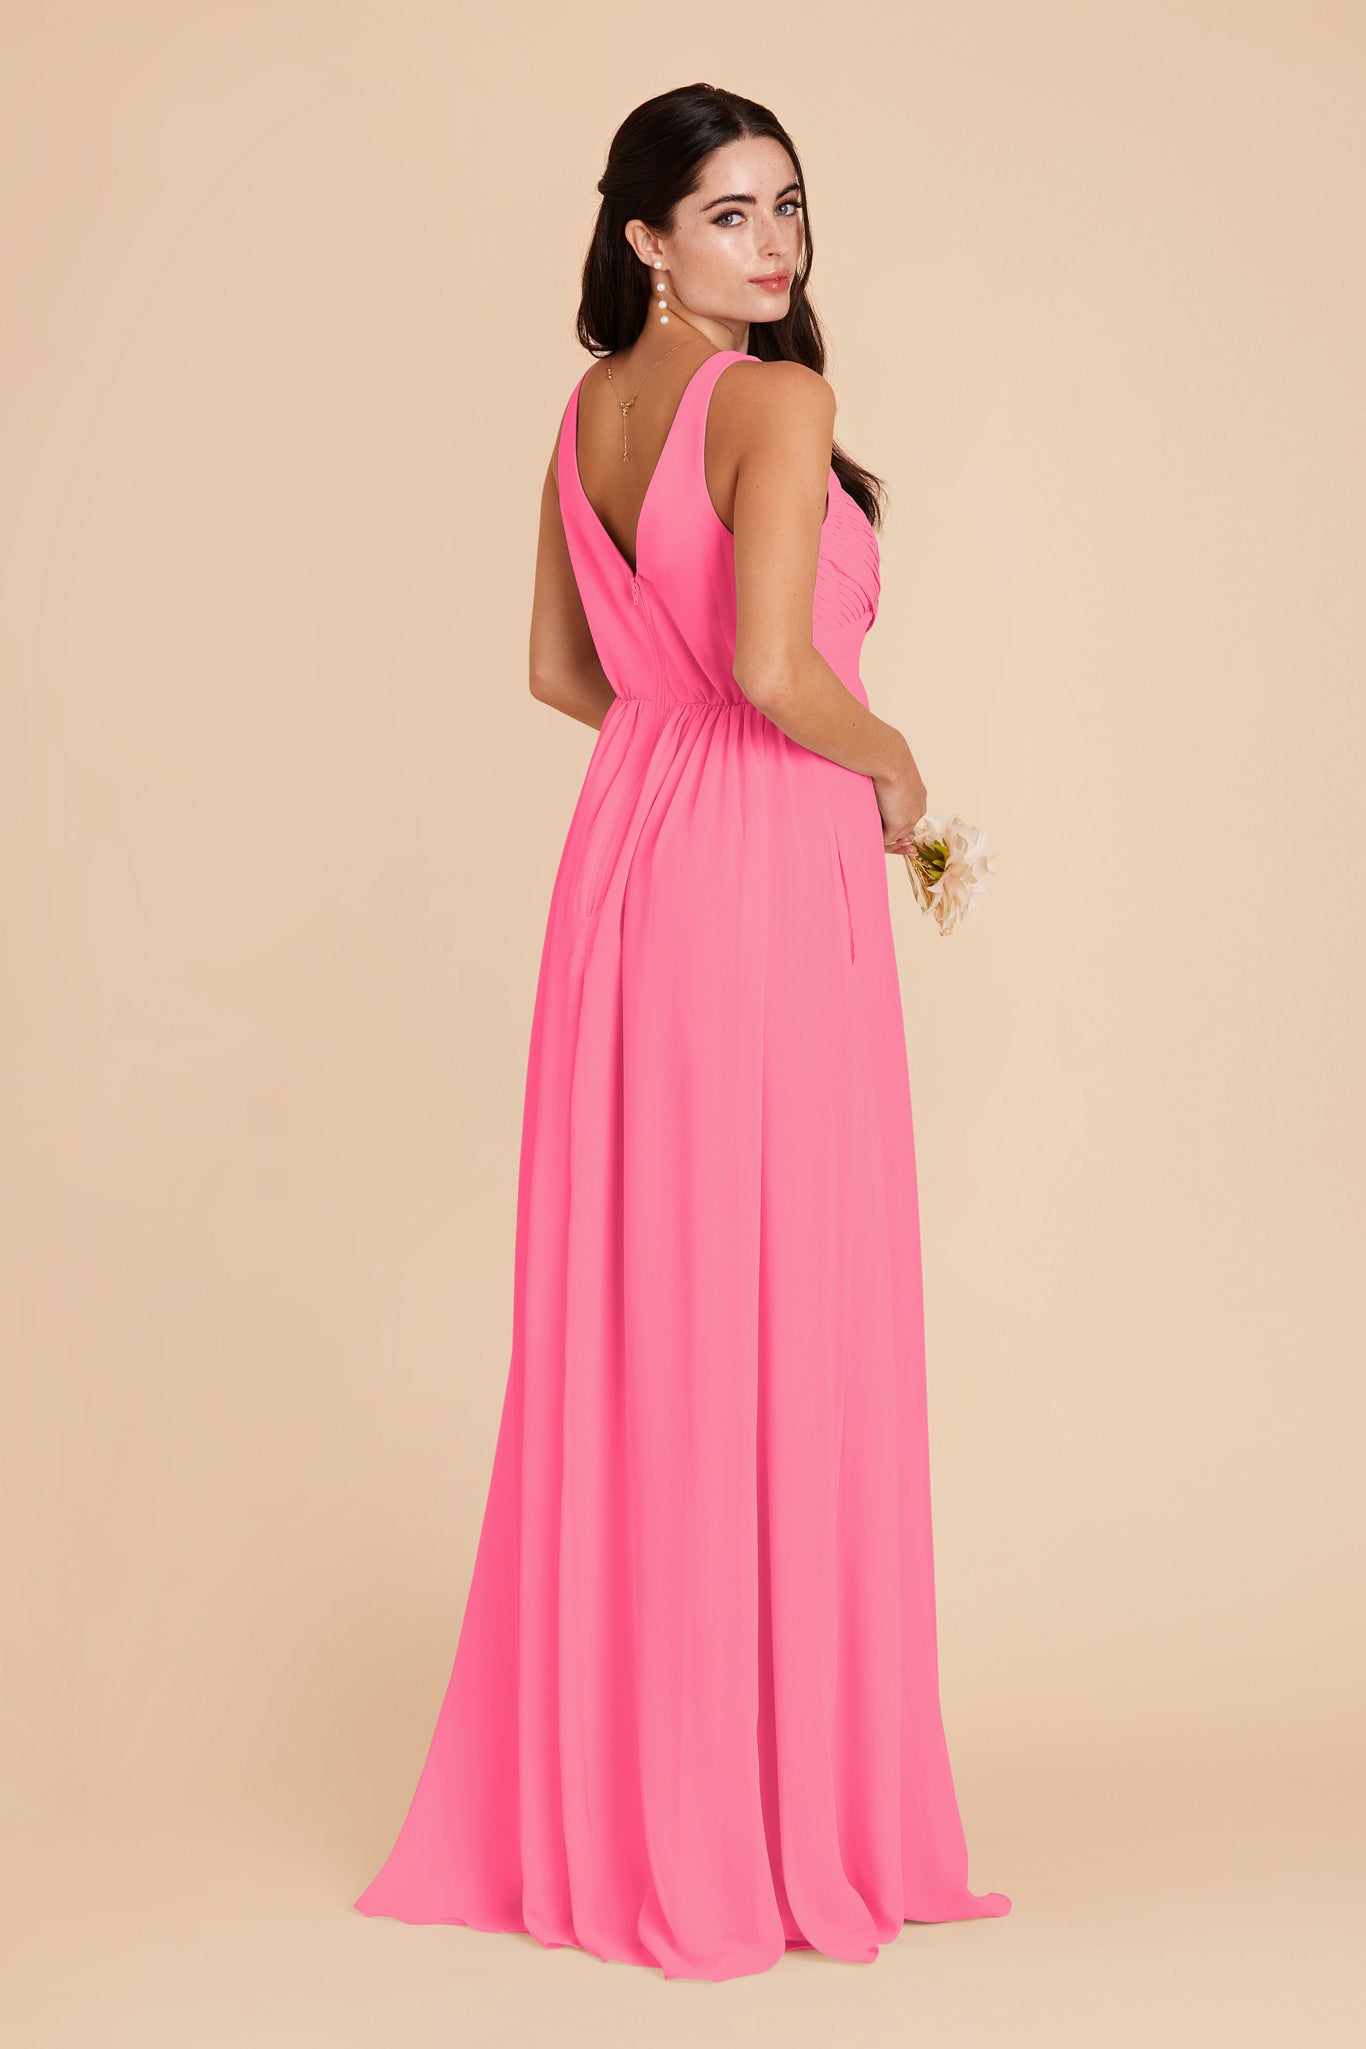 Bon Bon Pink Laurie Empire Dress by Birdy Grey